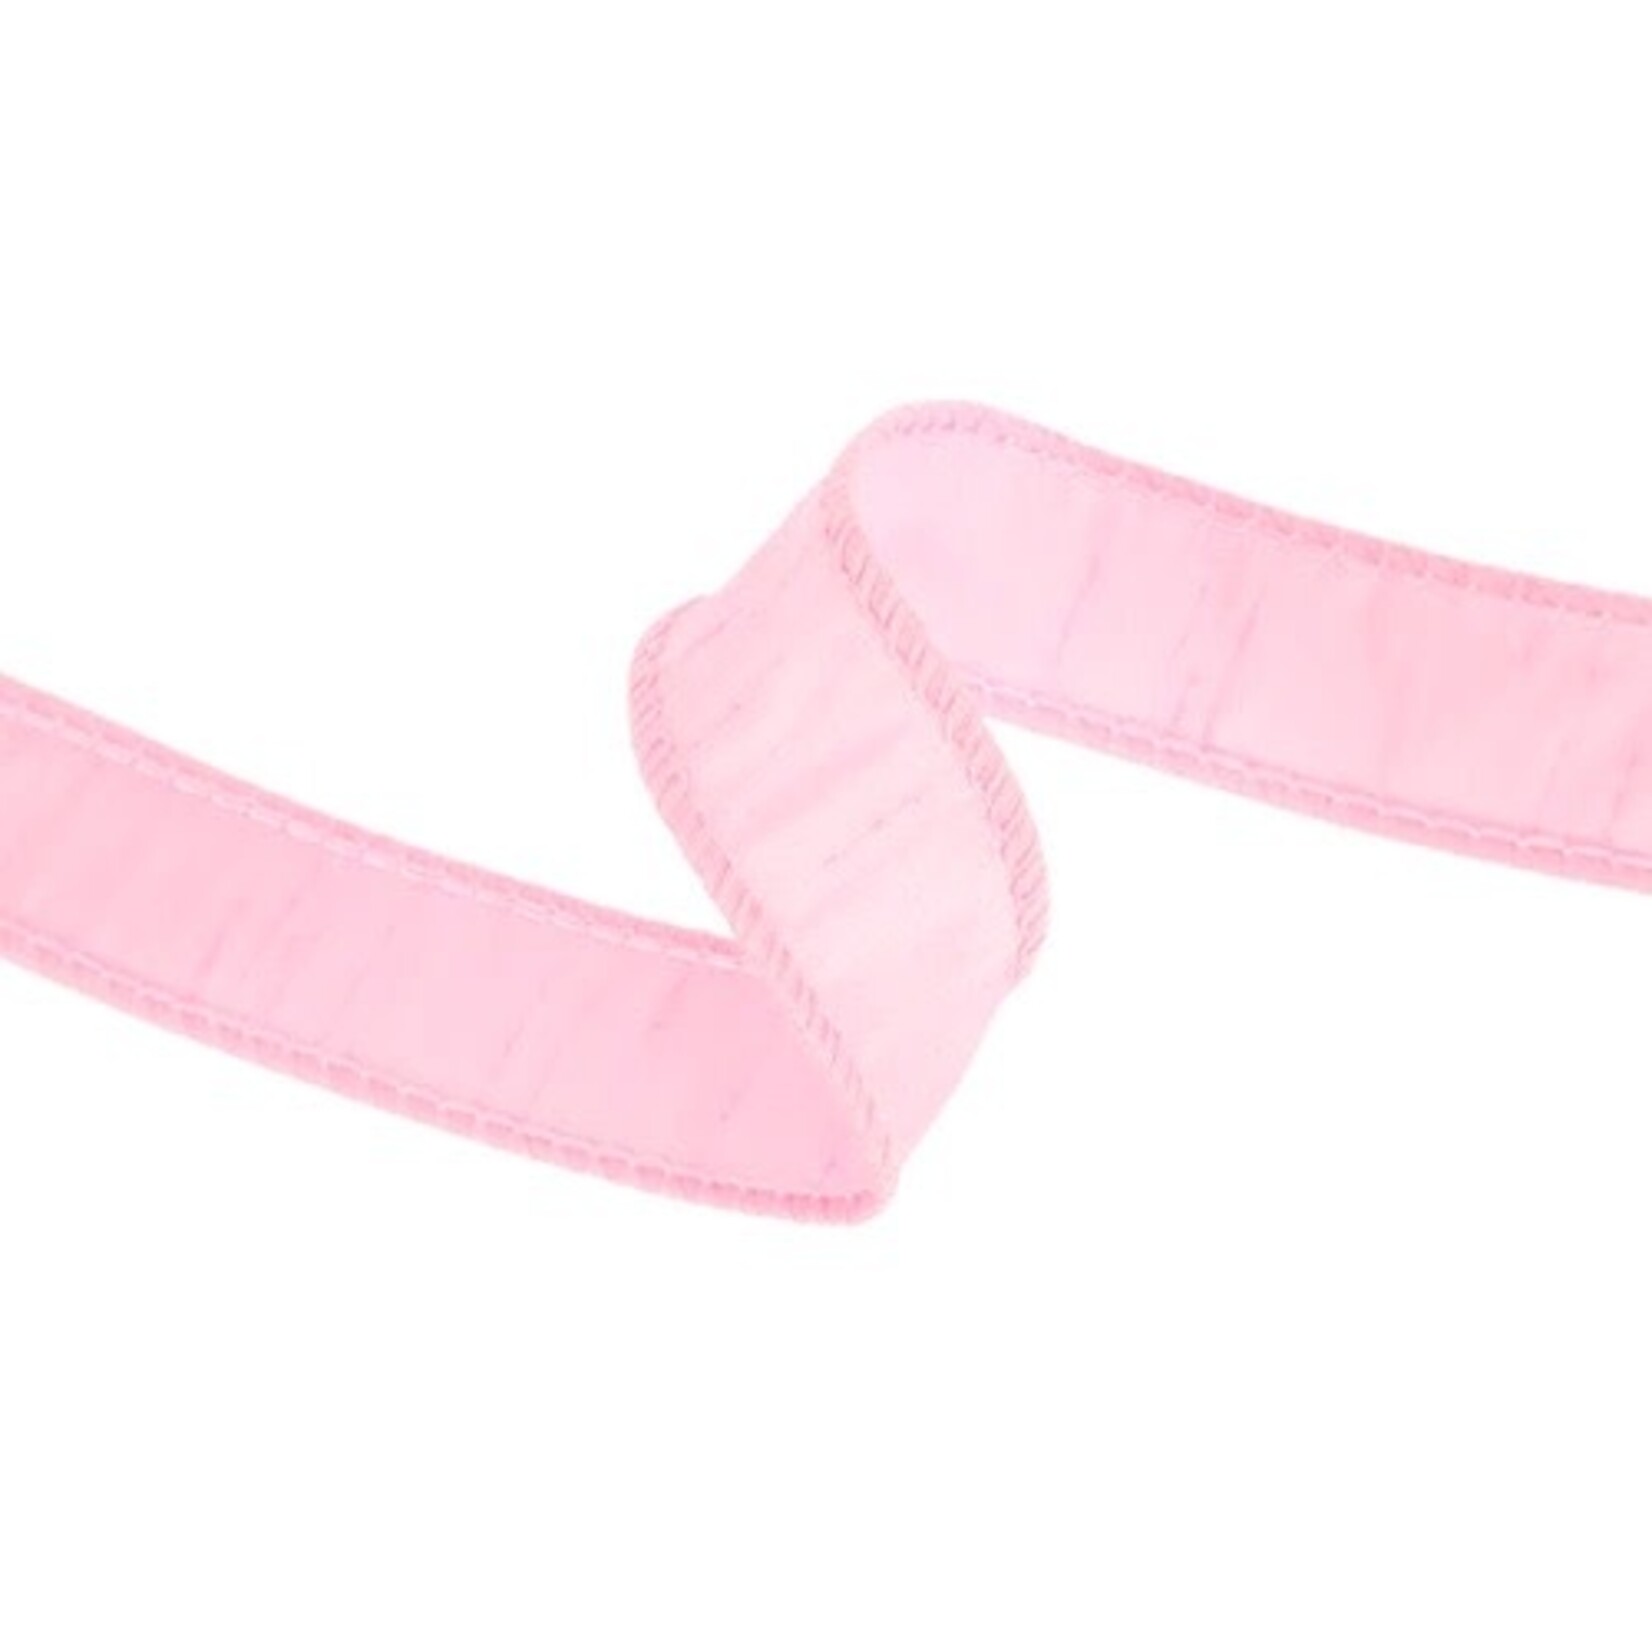 LA Ribbons and Crafts 1" Wired Dupioni Ribbon, Pink - 10 Yard Roll